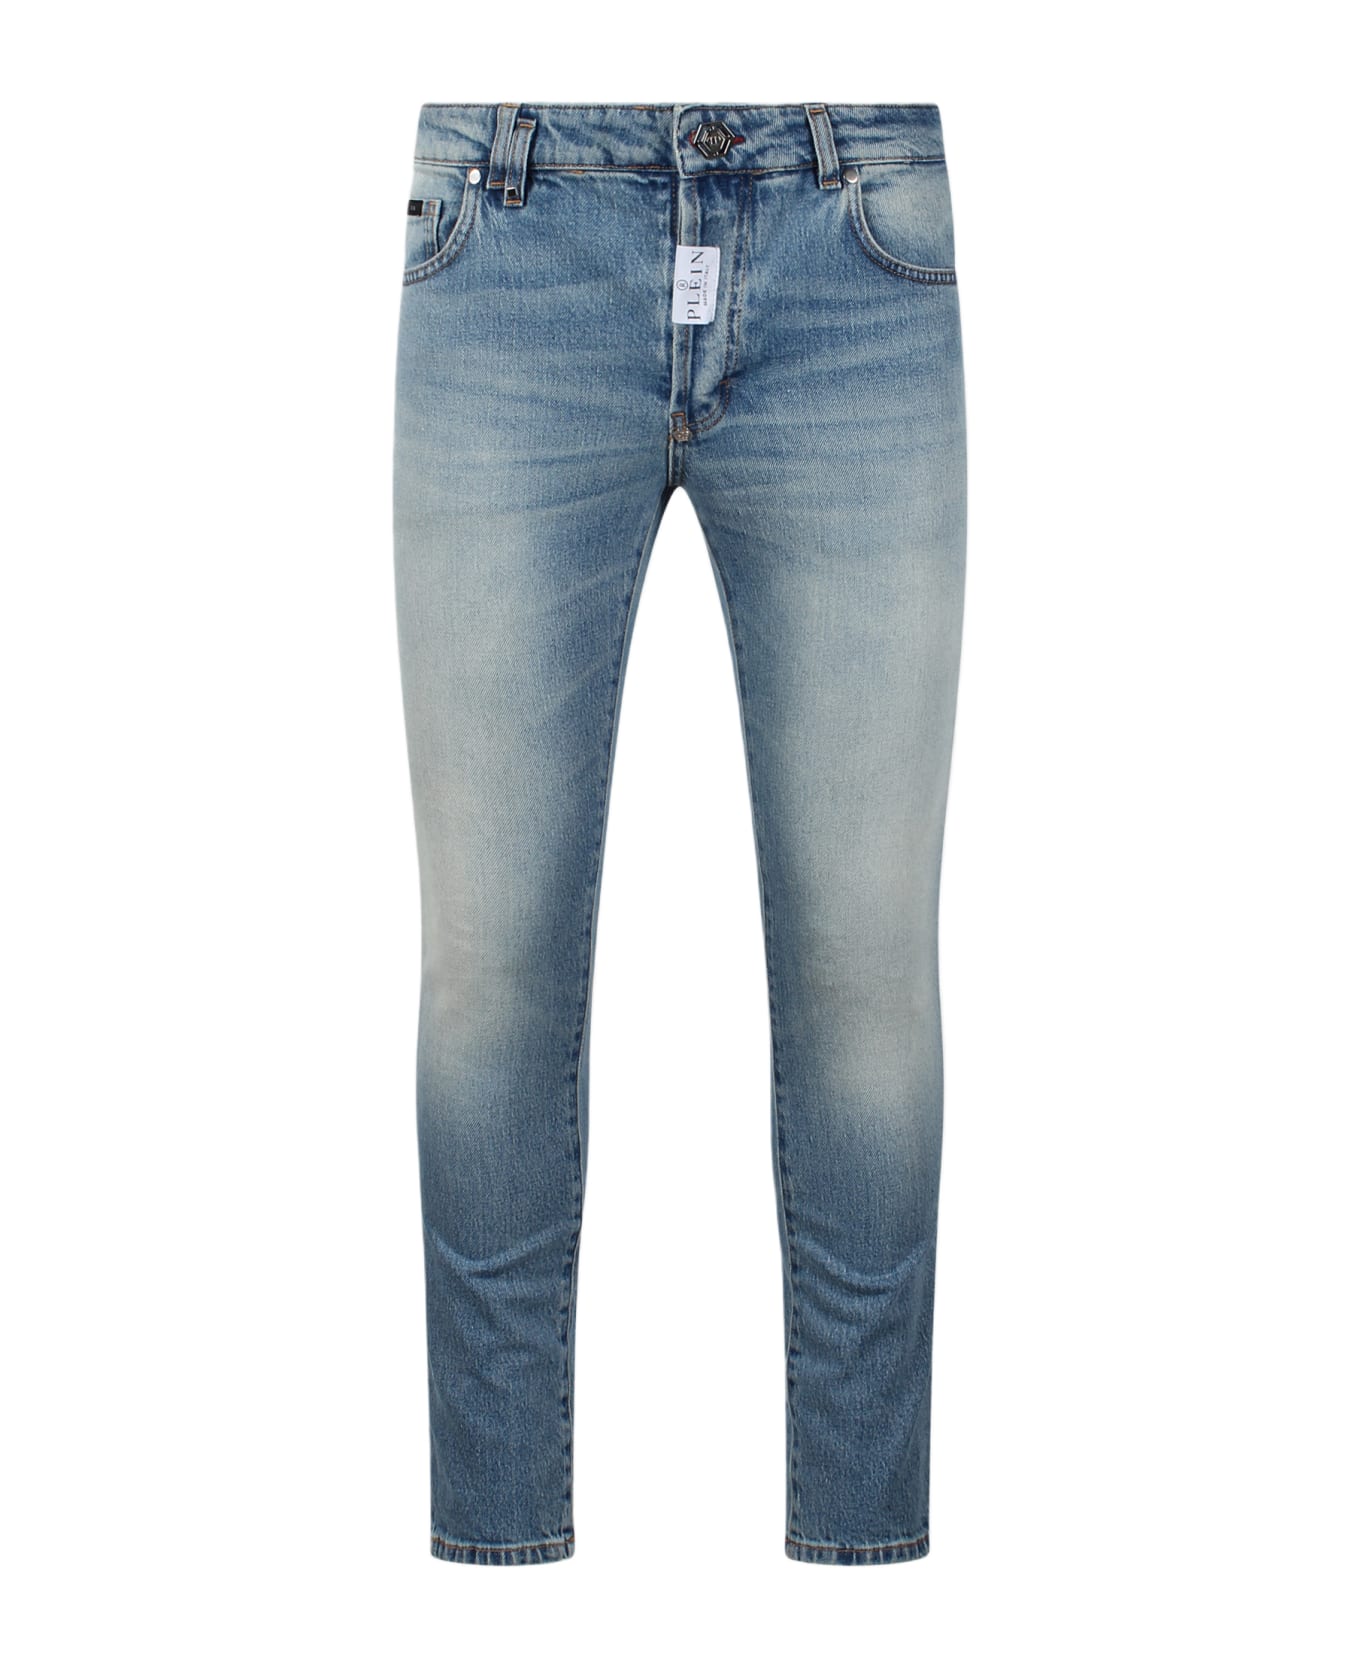 Philipp Plein Skinny Fit Denim Trousers - A Azure Blue デニム